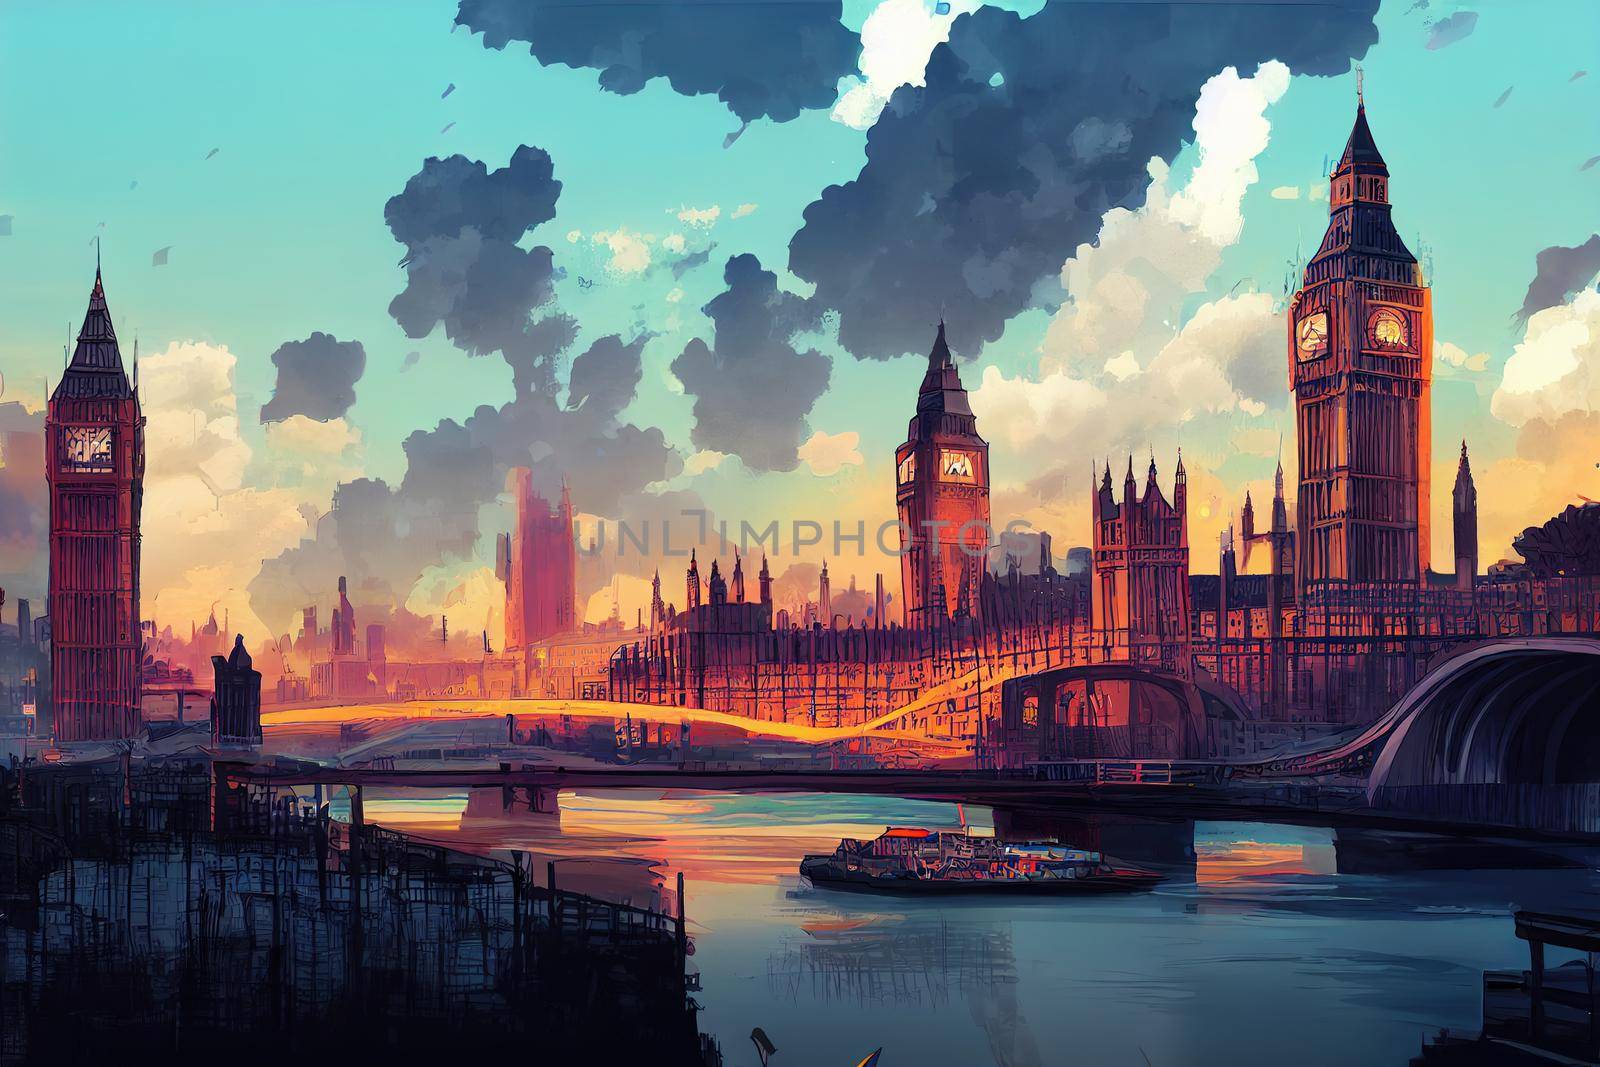 London city 2d Anime illustration by 2ragon